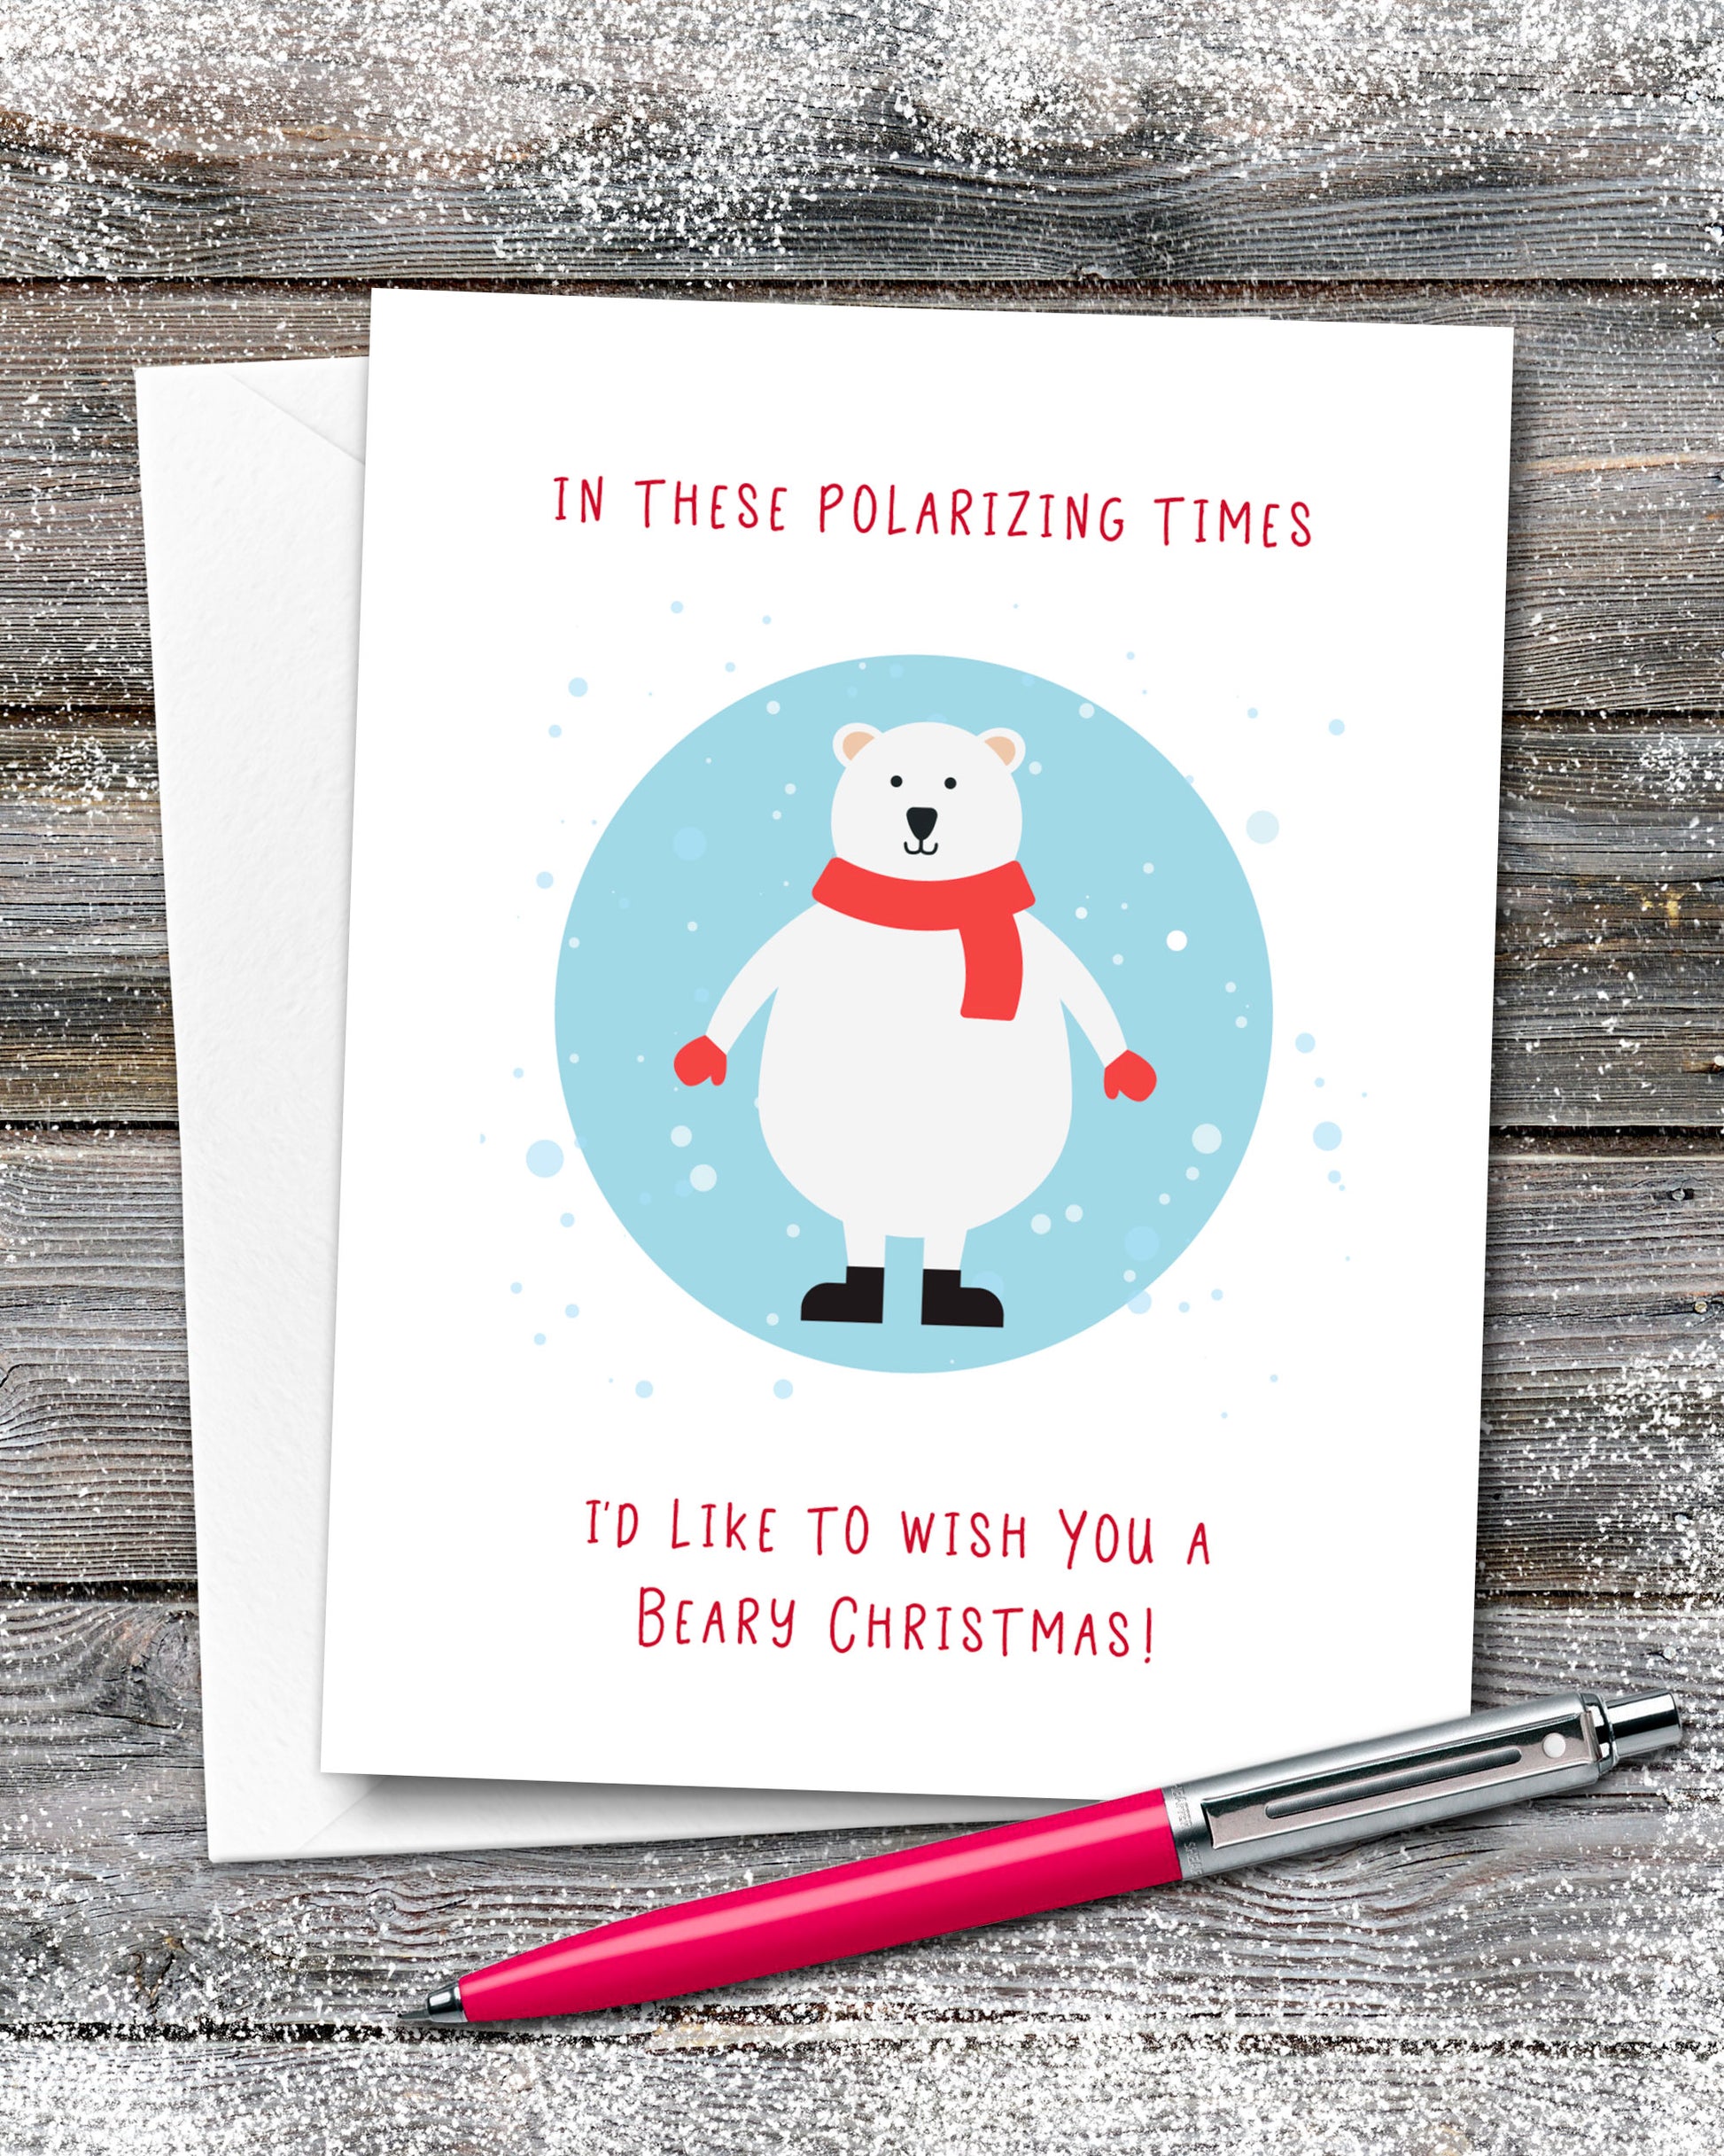 Polar Bear Christmas Card for Polarizing Times by Smirkantile